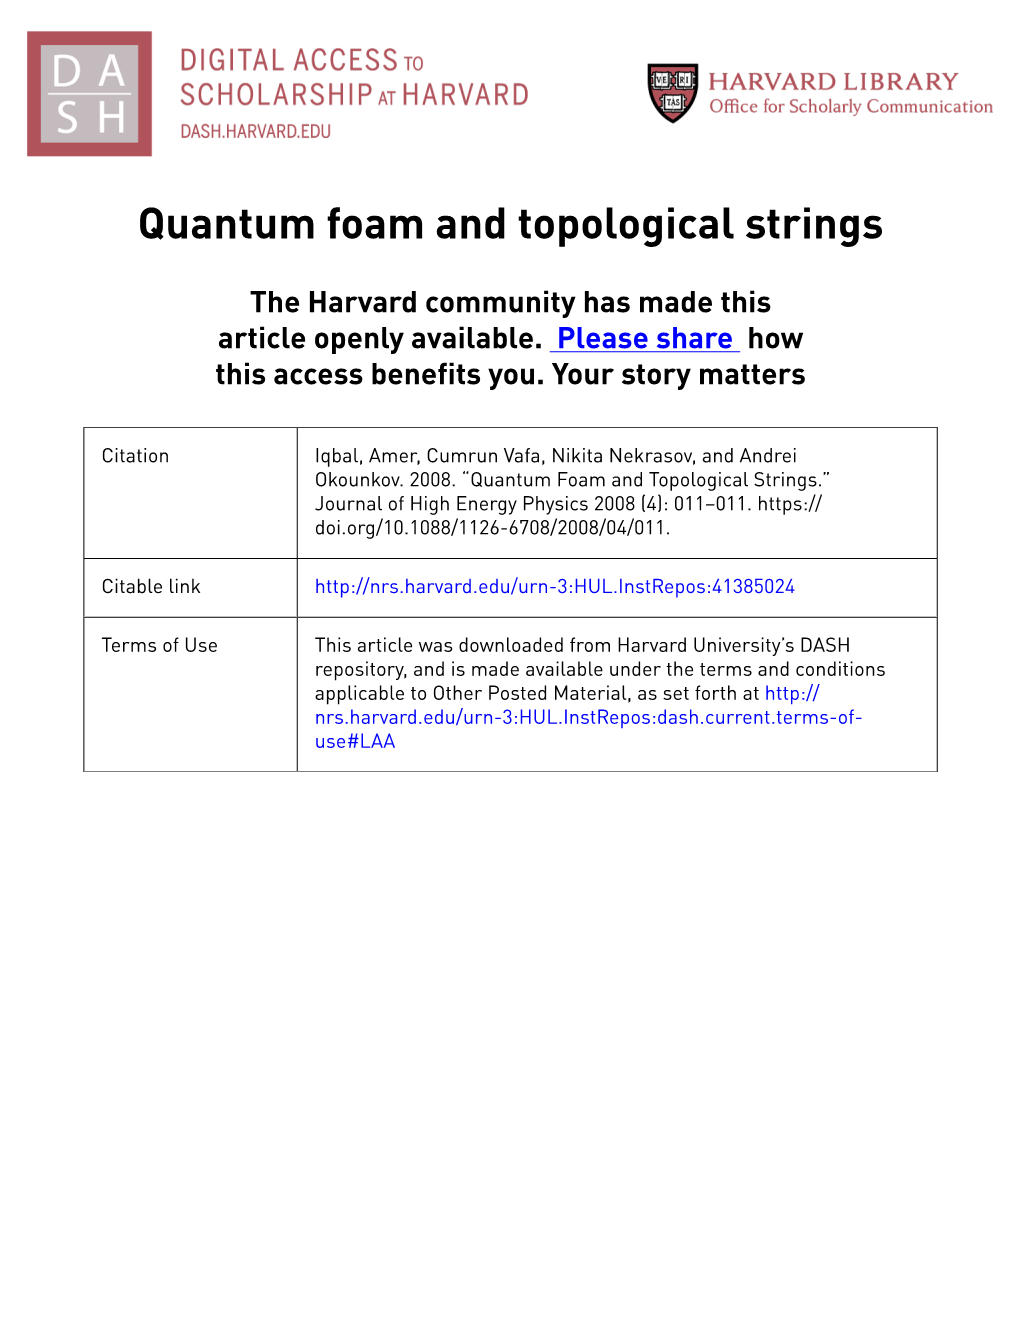 Quantum Foam and Topological Strings